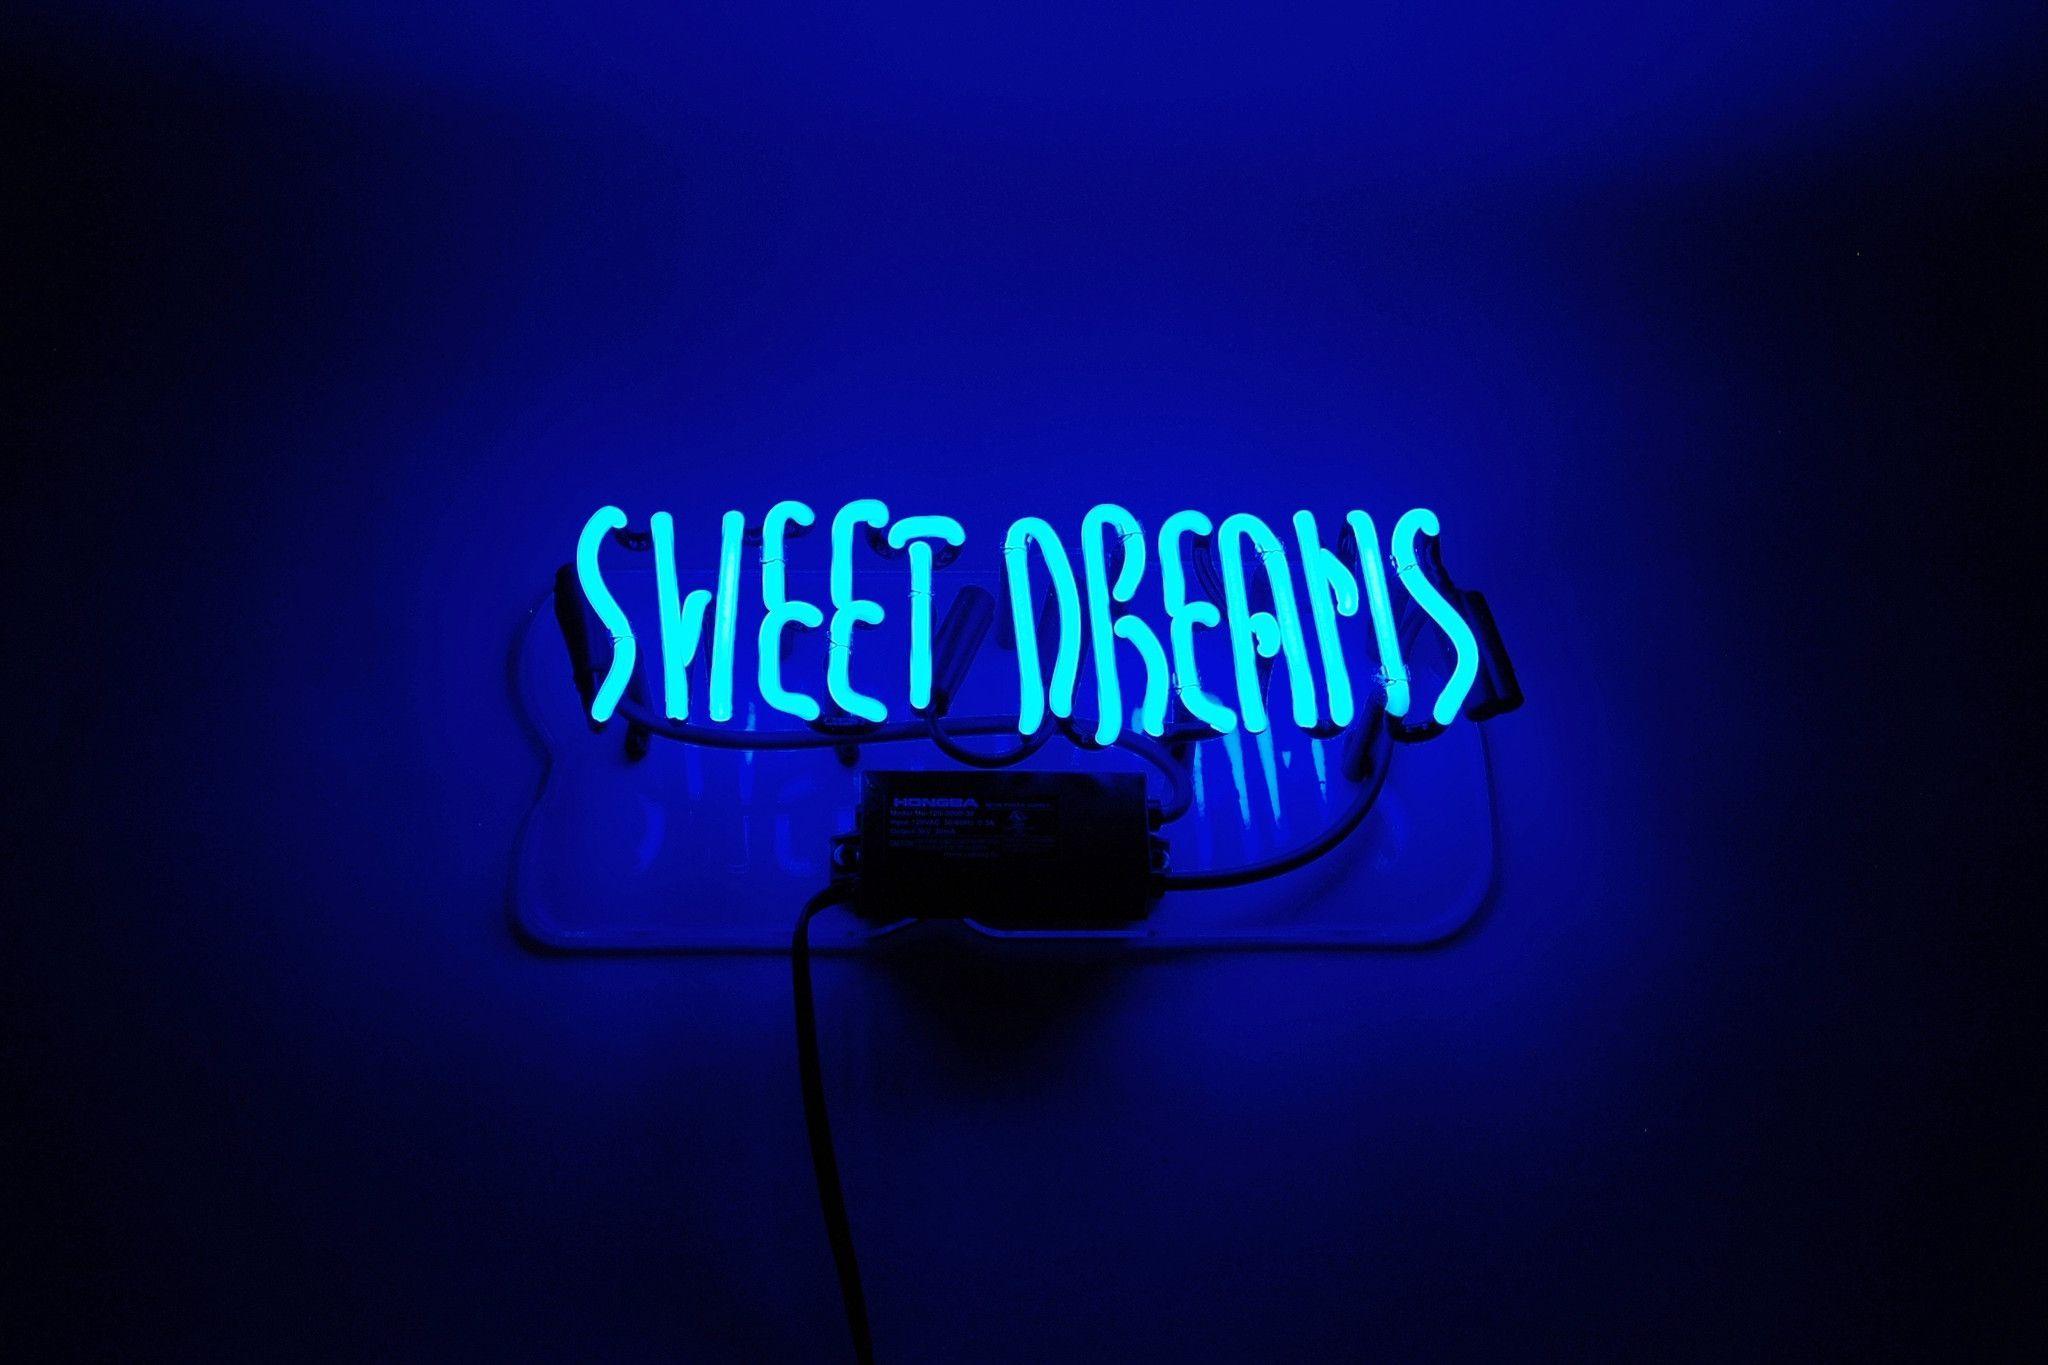 Sweet Dreams Neon Sign Wallpaper 66618 2048x1365px